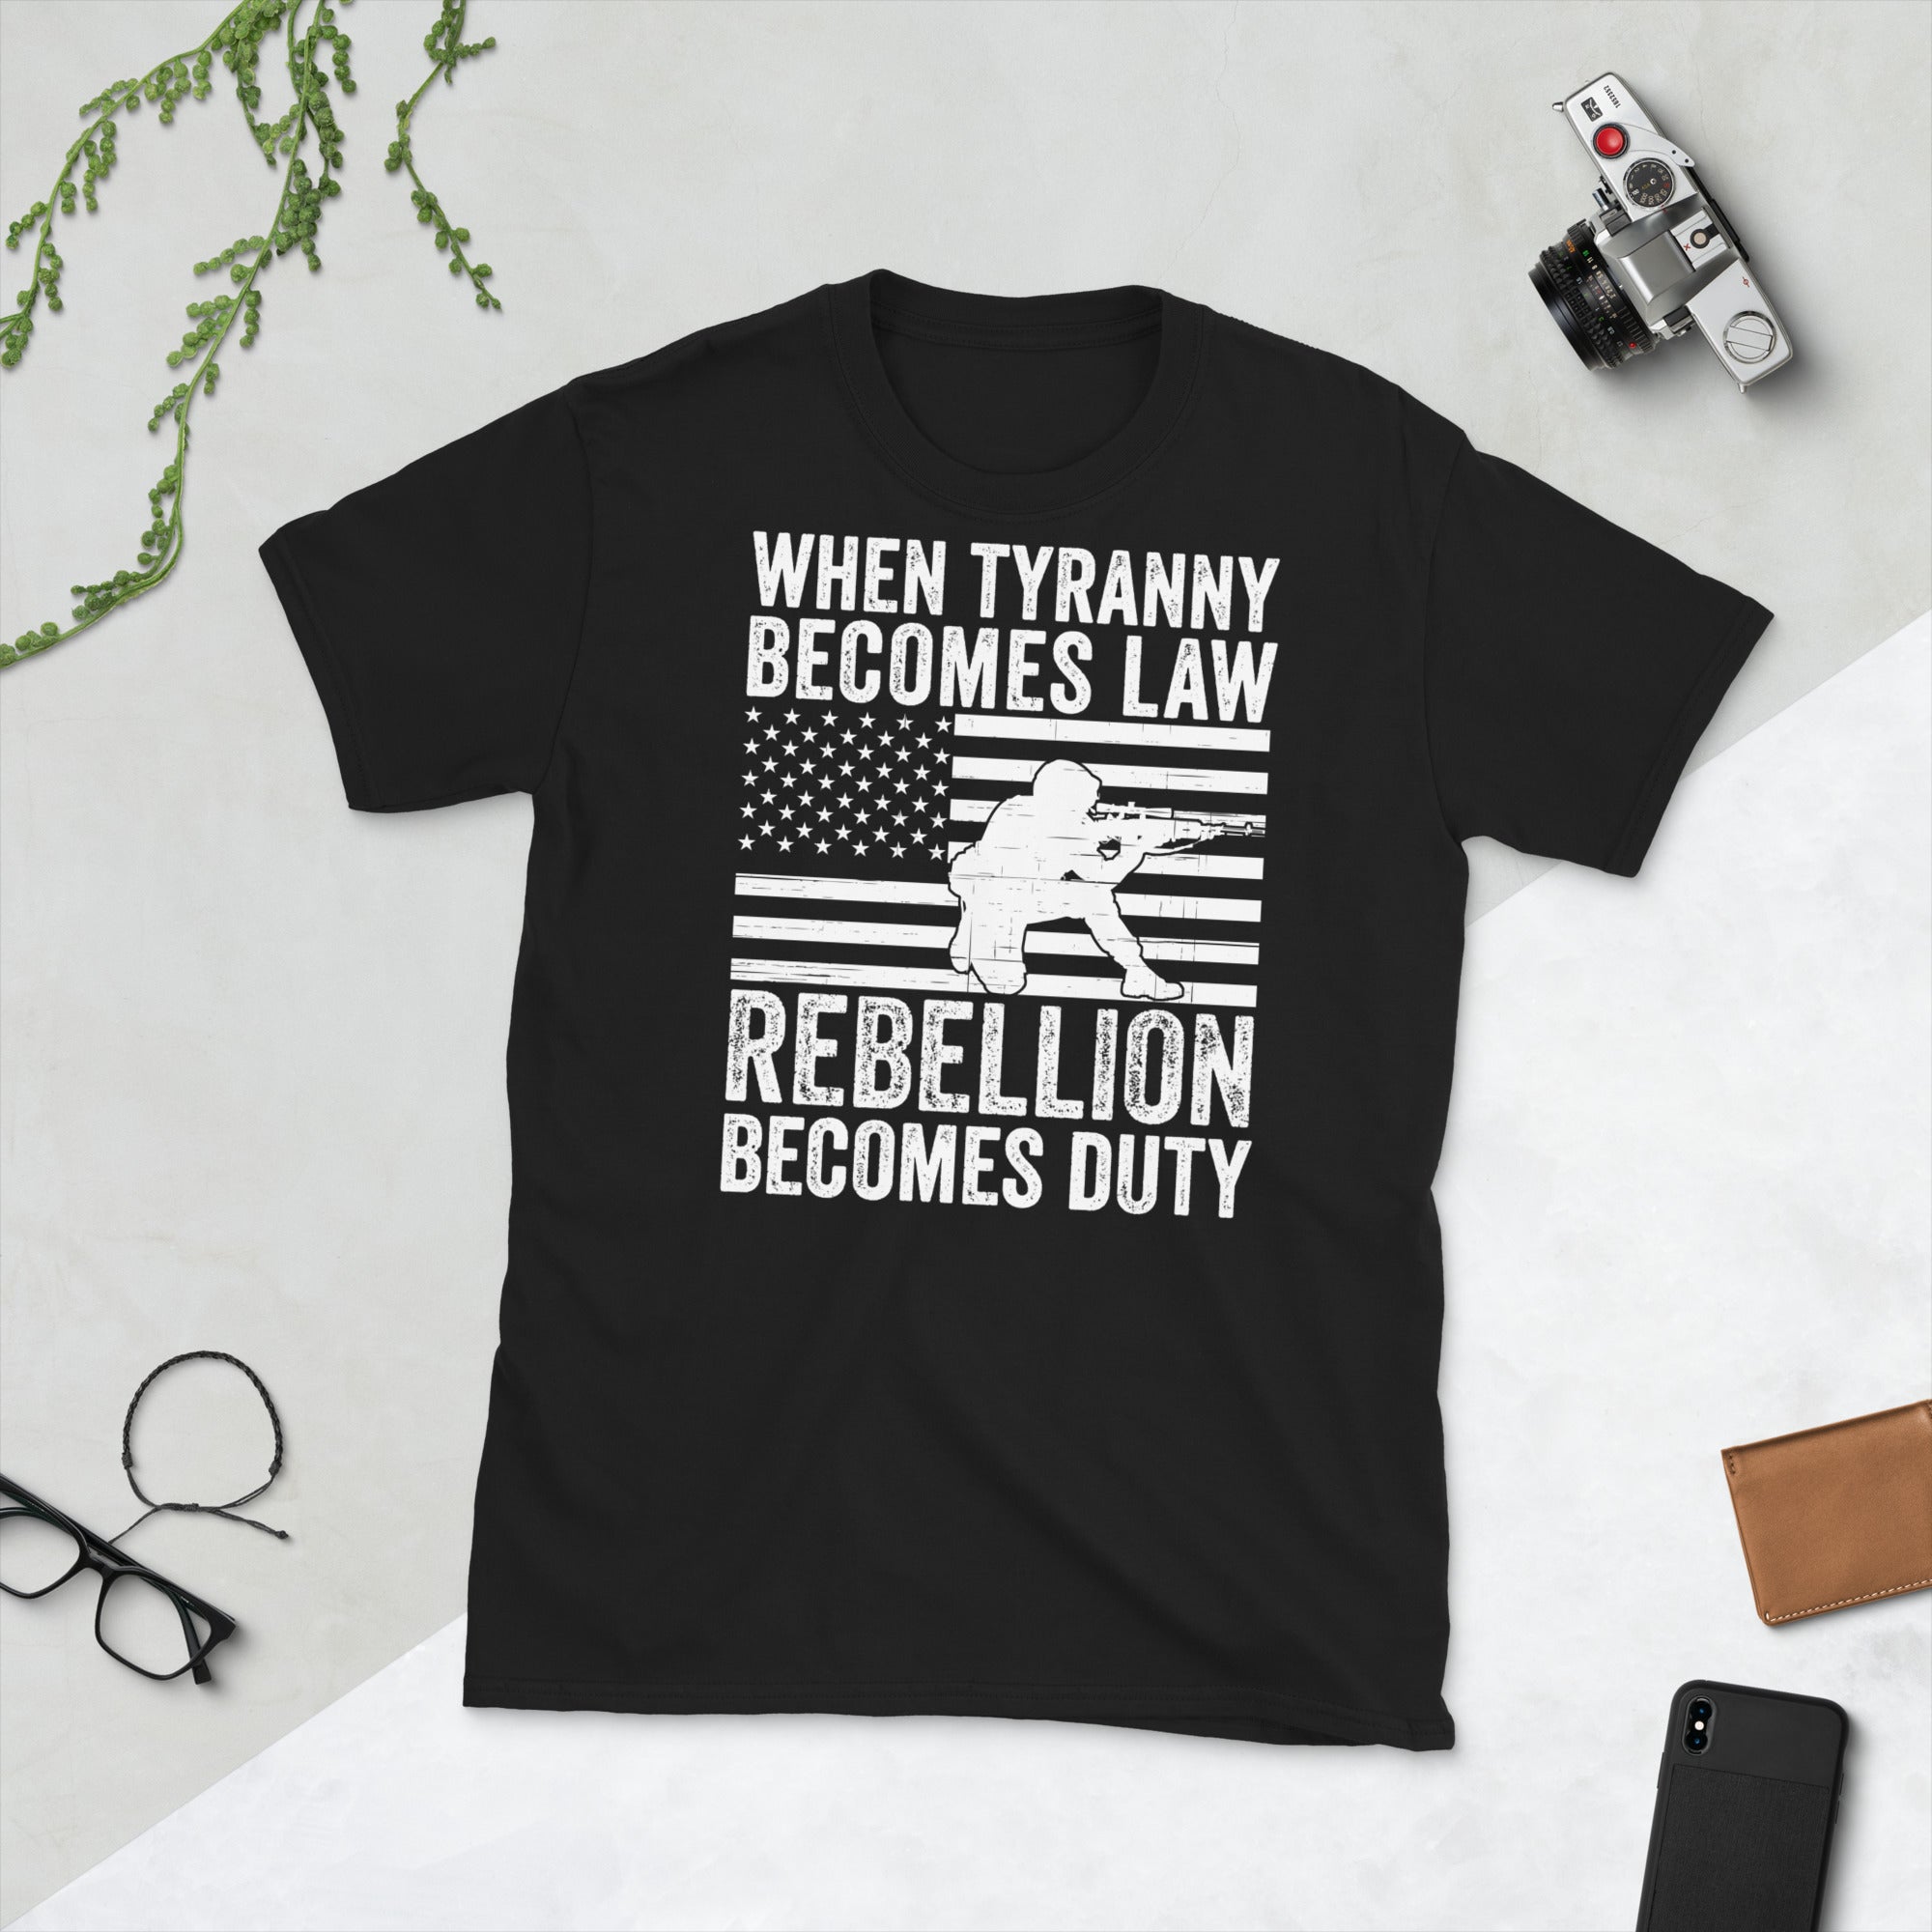 Tyranny Shirt, Rebellion Shirt, When Tyranny Becomes Law, Rebellion Becomes Duty, 1776 Shirt, Thomas Jefferson Shirt, Political Shirts